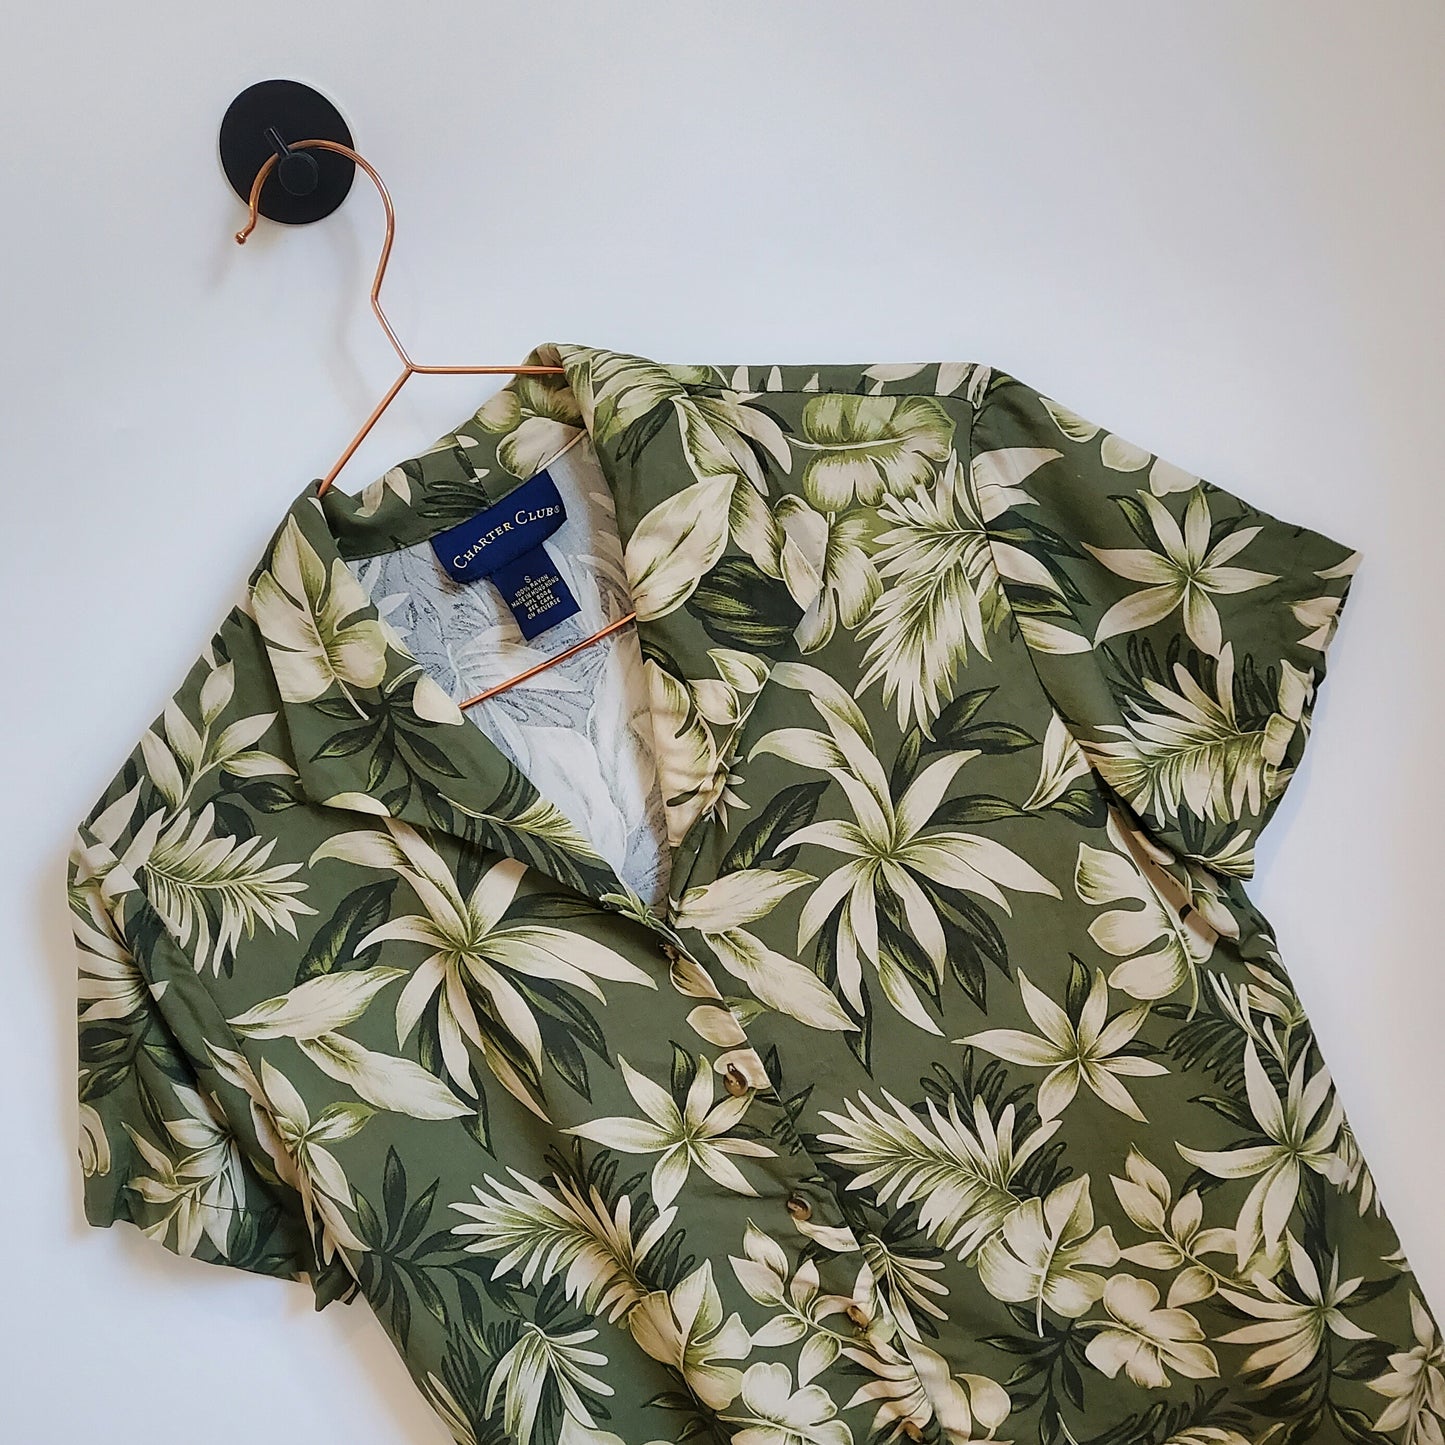 Vintage Floral Hawaiian Beach Shirt | Size S